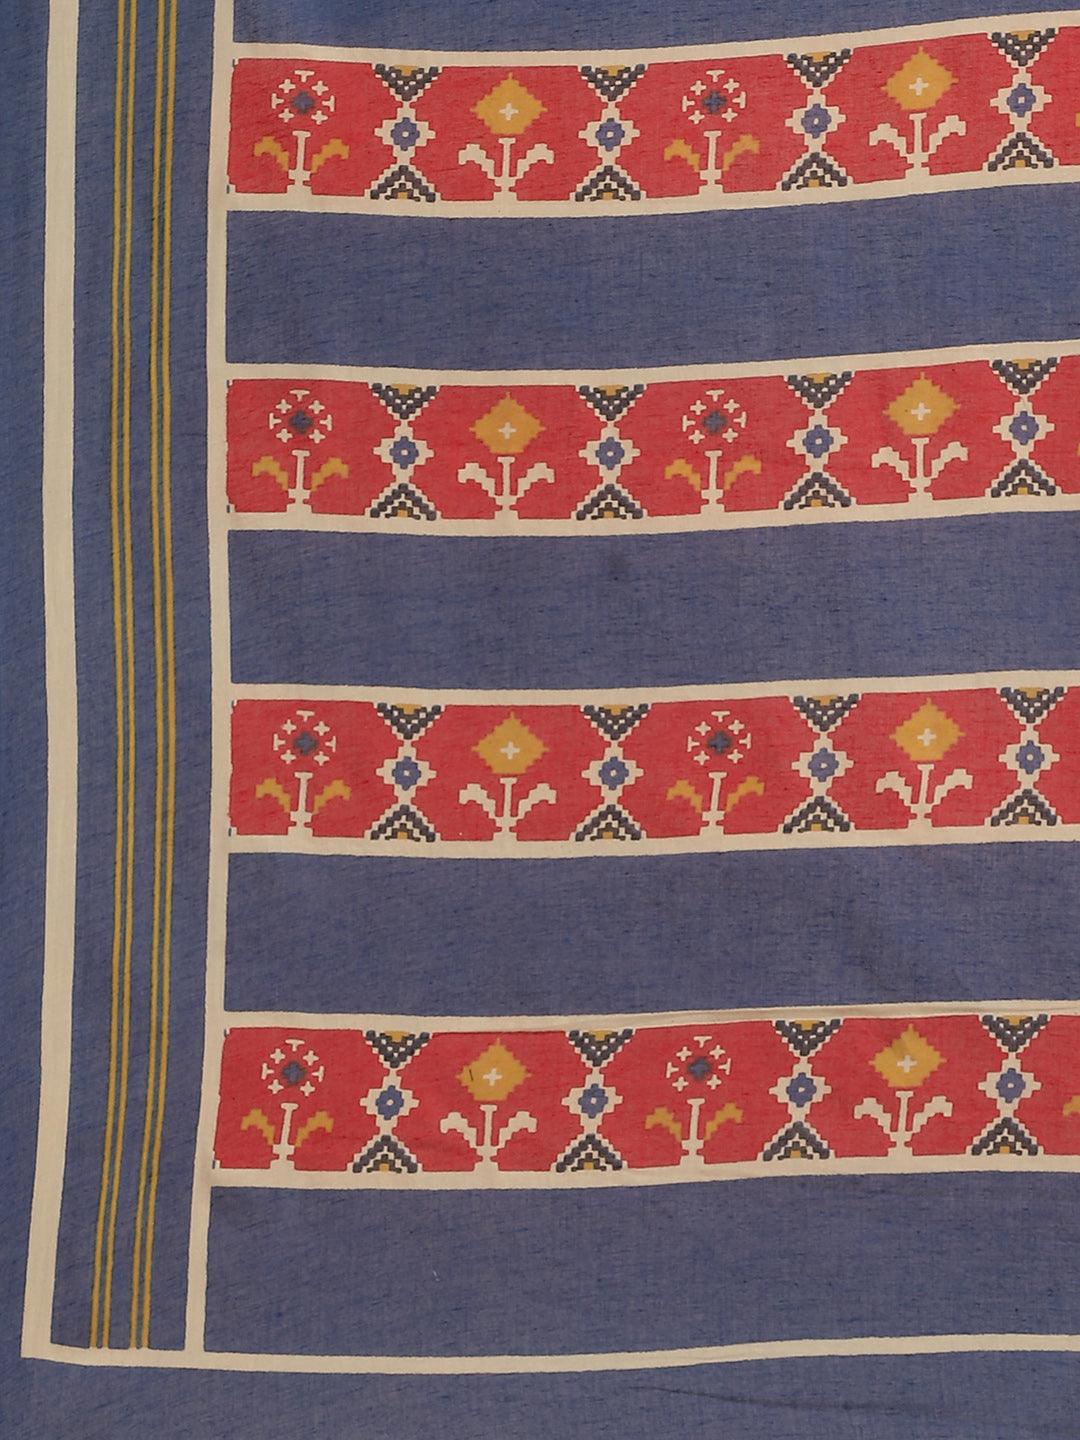 Multicoloured Printed Cotton Saree - Libas